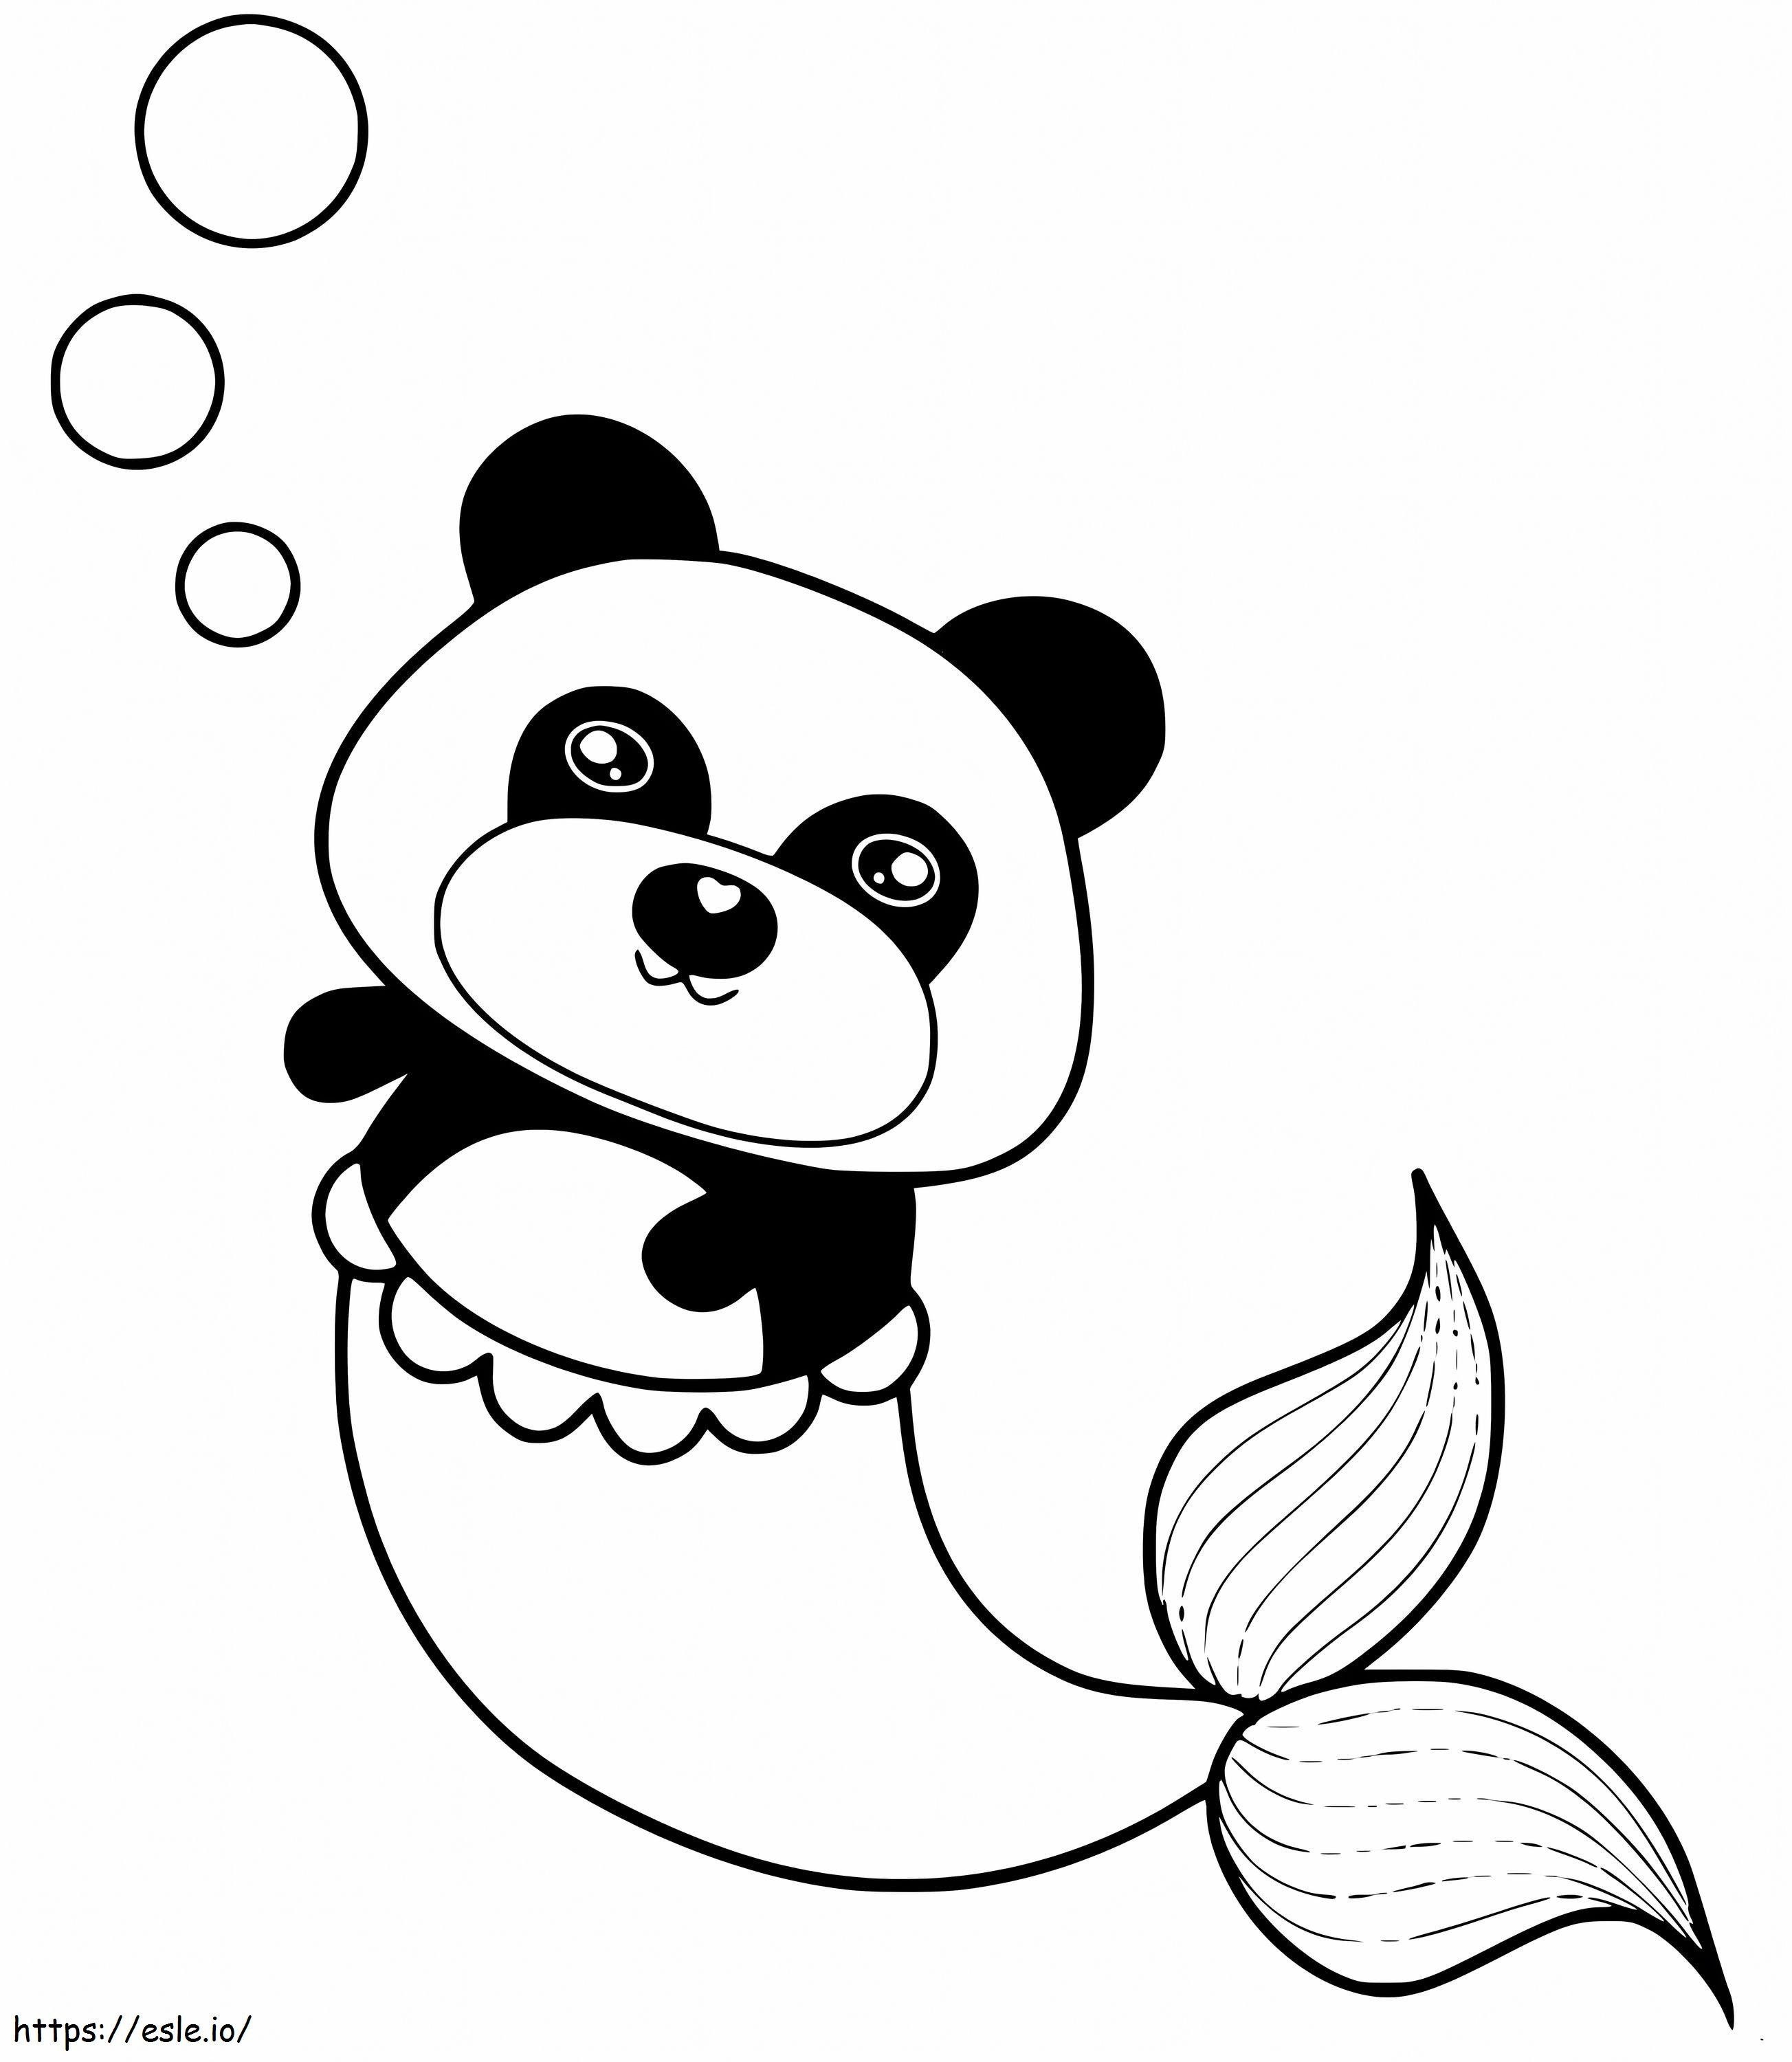 Panda Sereia 1 para colorir